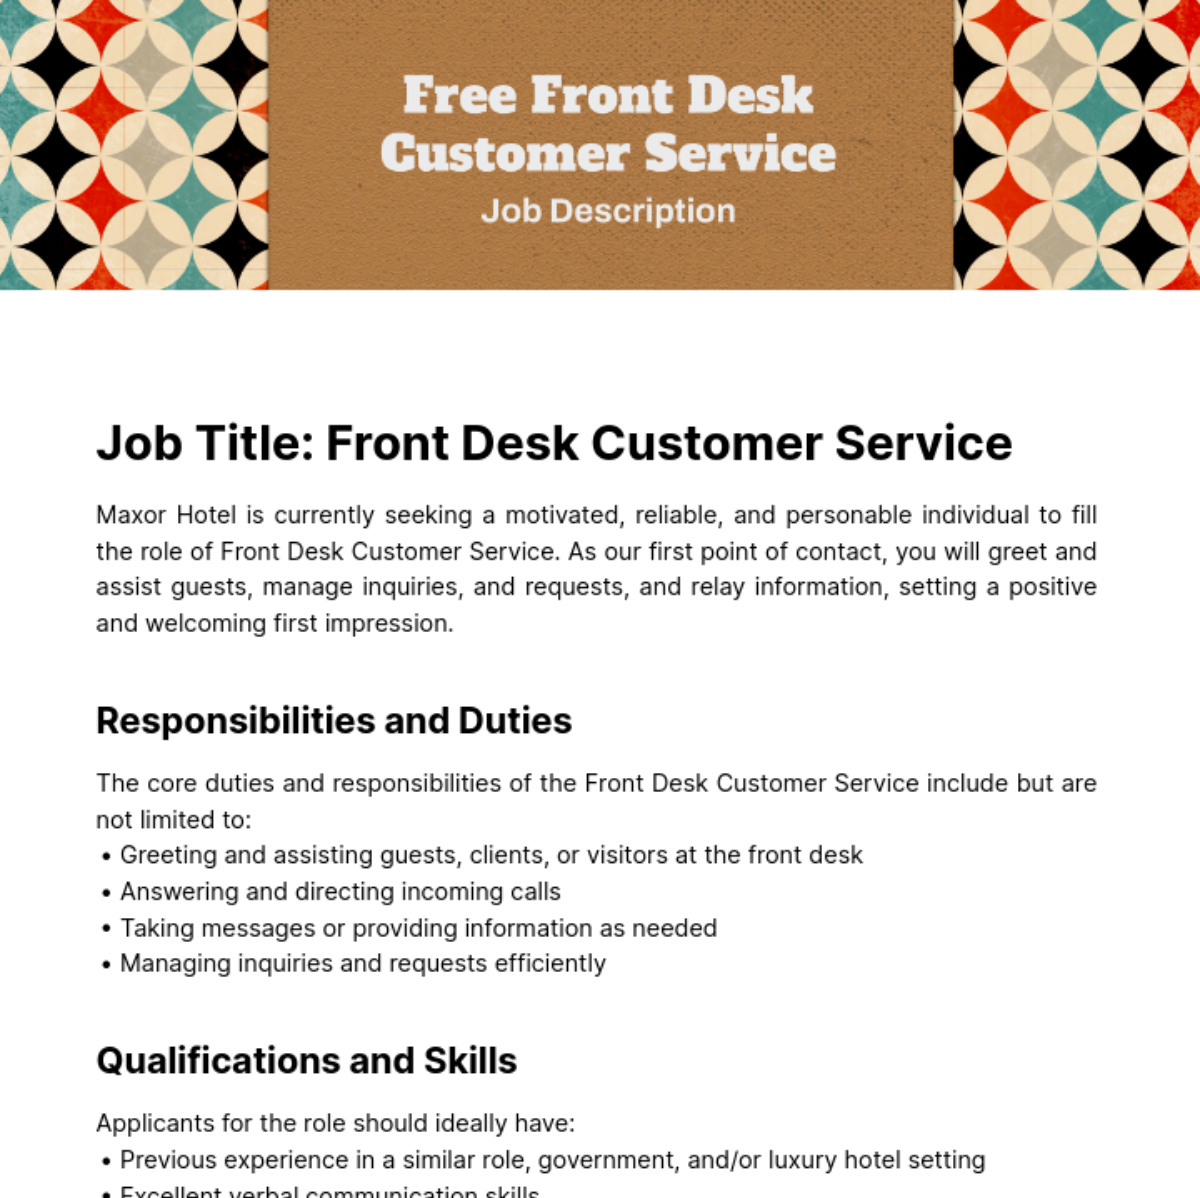 Free Front Desk Customer Service Job Description Template